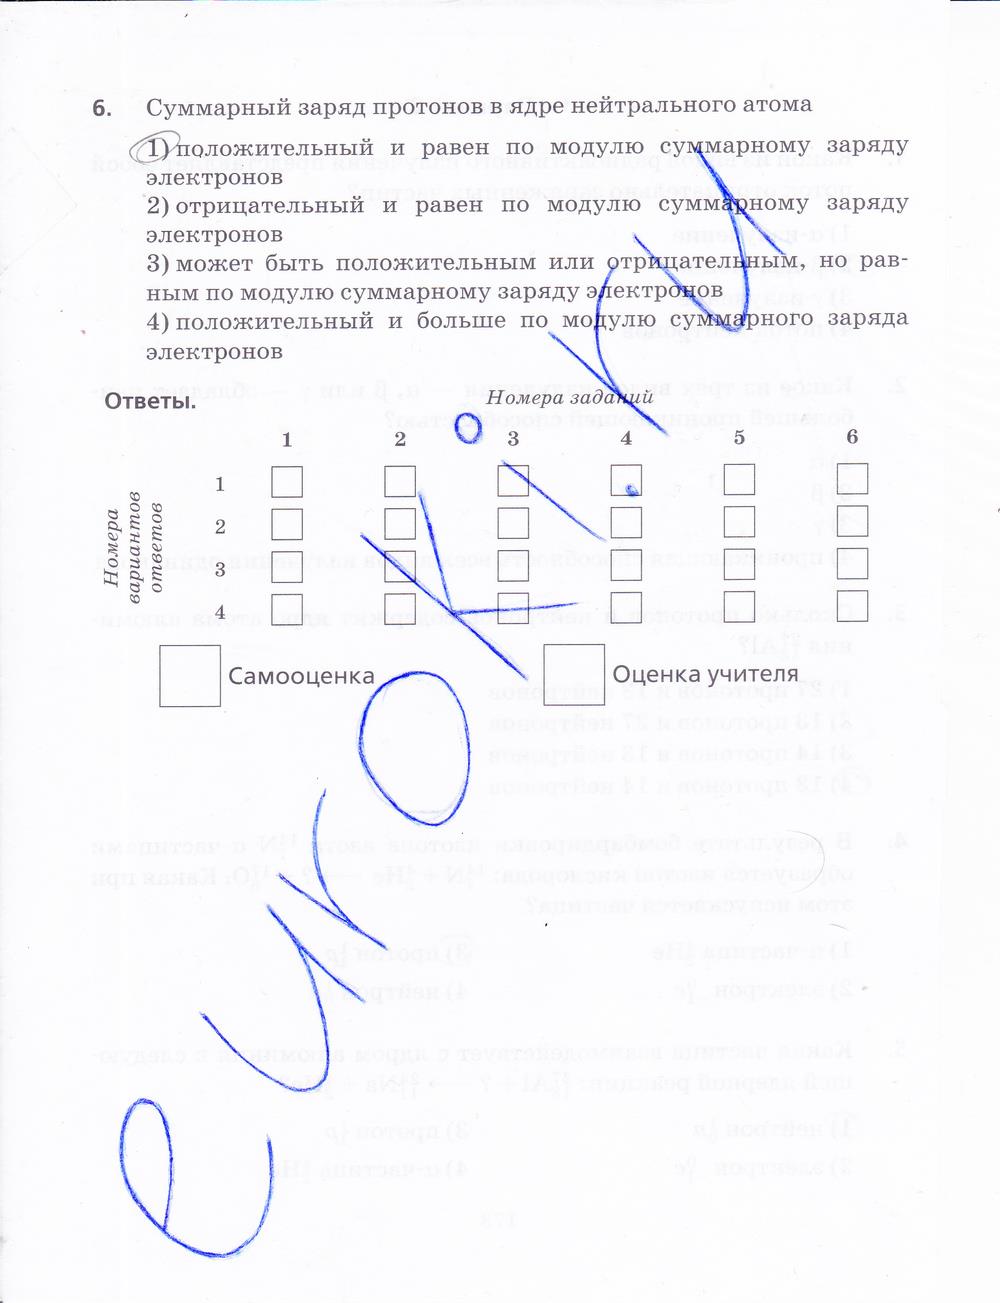 гдз 9 класс рабочая тетрадь страница 174 физика Пурышева, Важеевская, Чаругин